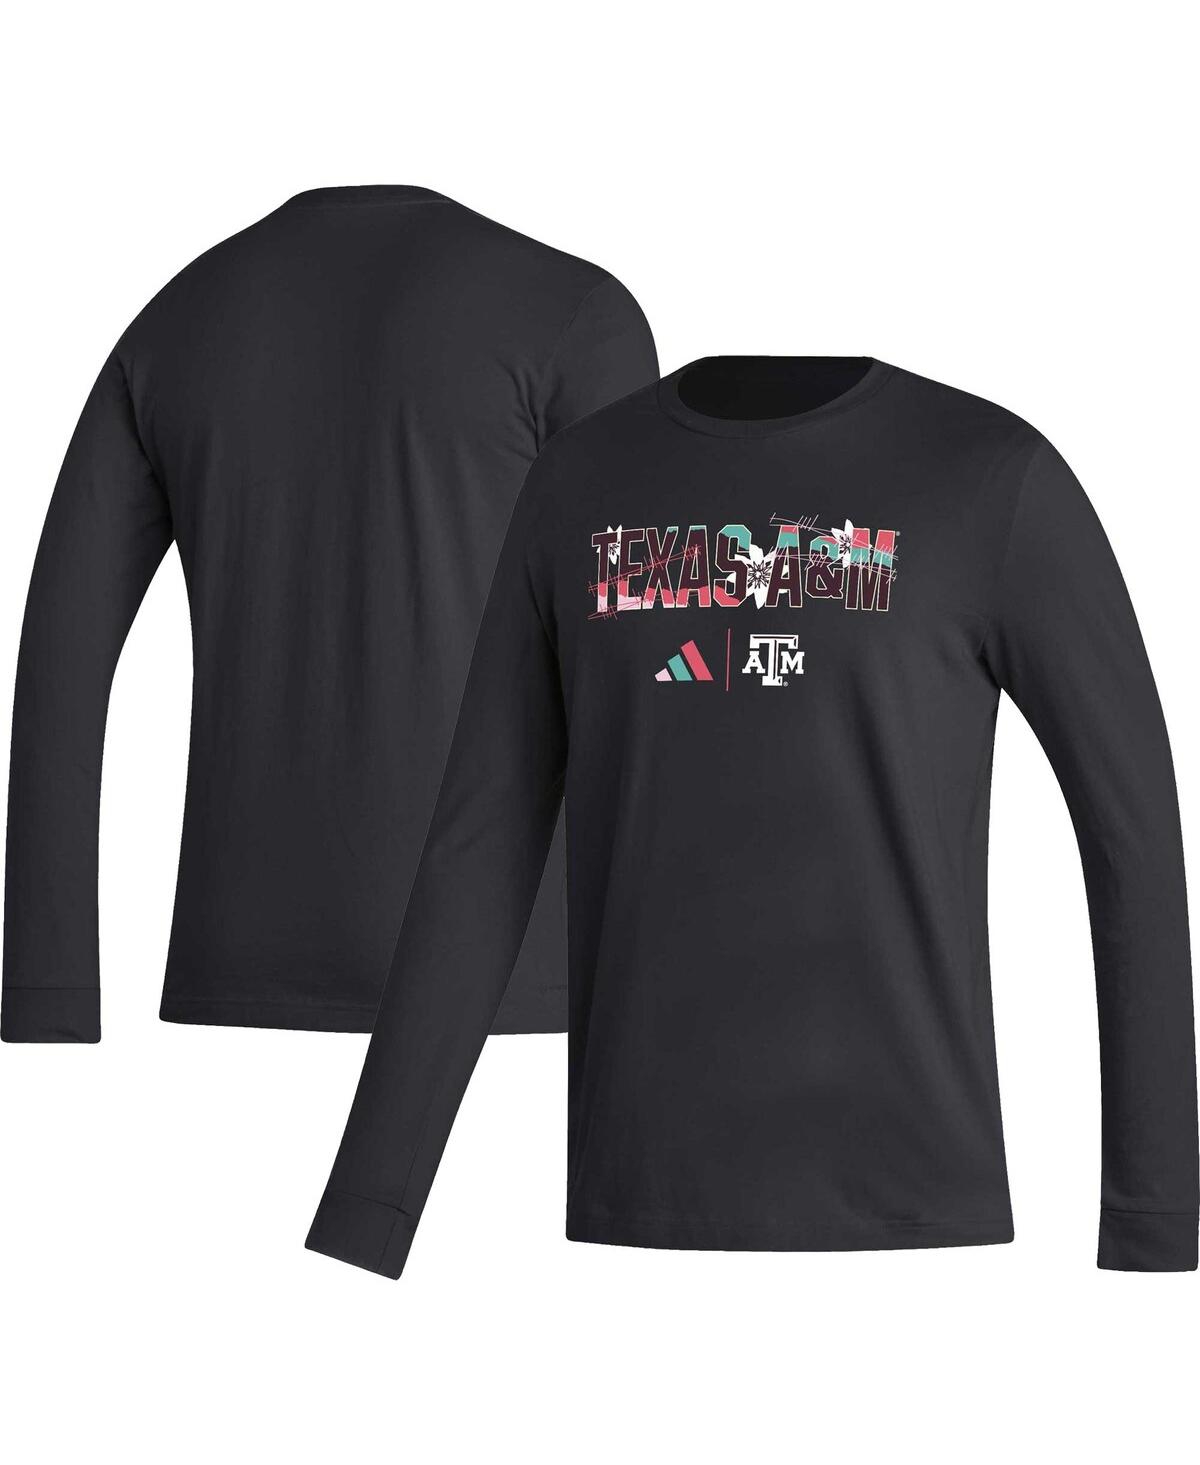 Shop Adidas Originals Men's Adidas Black Texas A&m Aggies Honoring Black Excellence Long Sleeve T-shirt